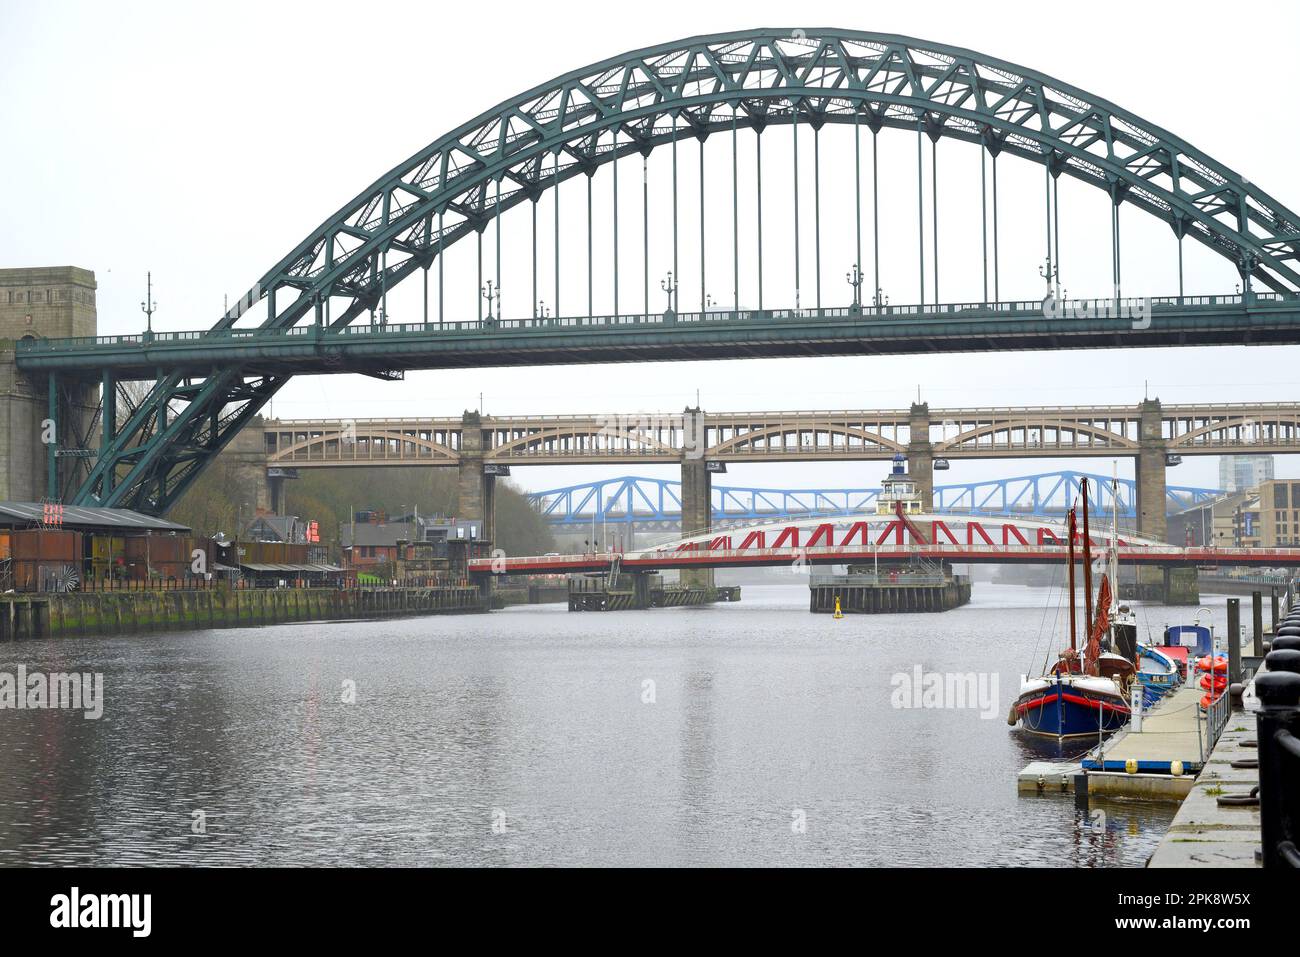 Newcastle upon Tyne, Tyne and Wear, England, UK. Tyne Bridge (1928) over the river, on a grey, rainy day. Stock Photo